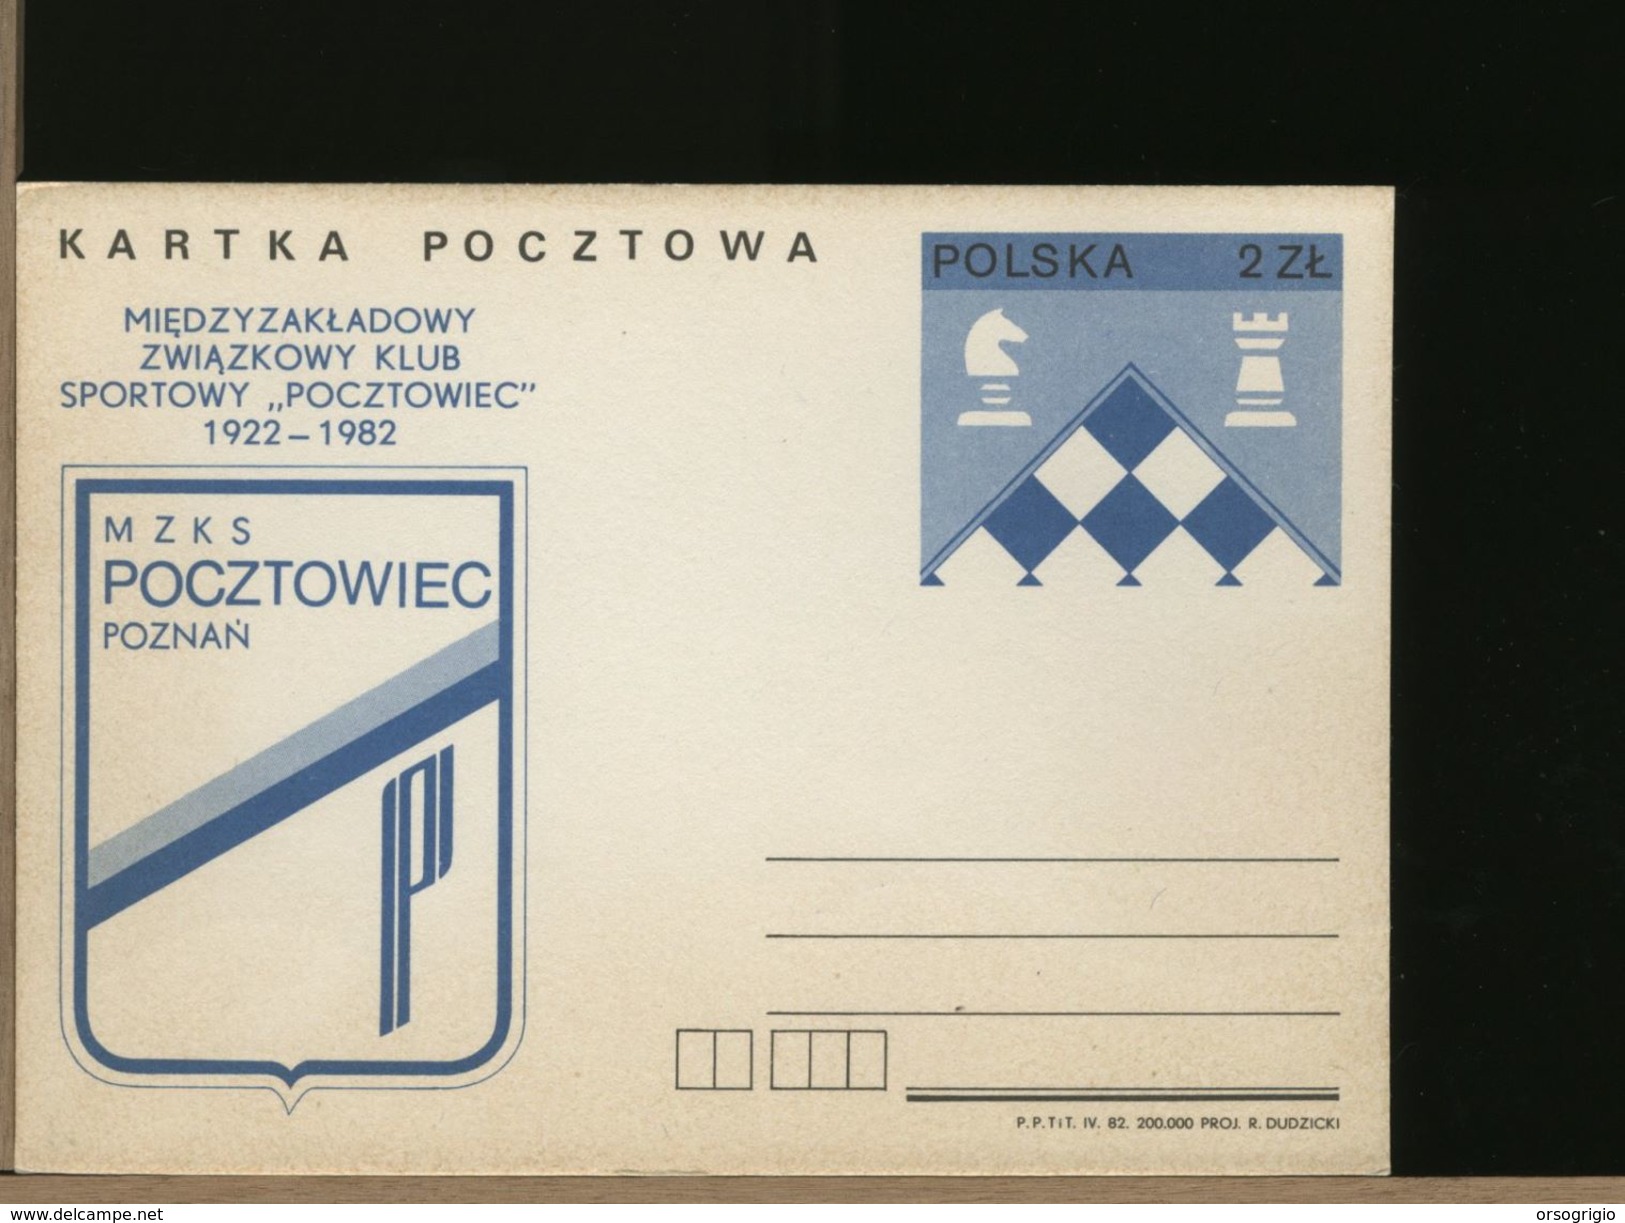 POLSKA - CP - Cartolina Intero Postale - Chess - Scacchi - Pocztowiec Poznan - Echecs